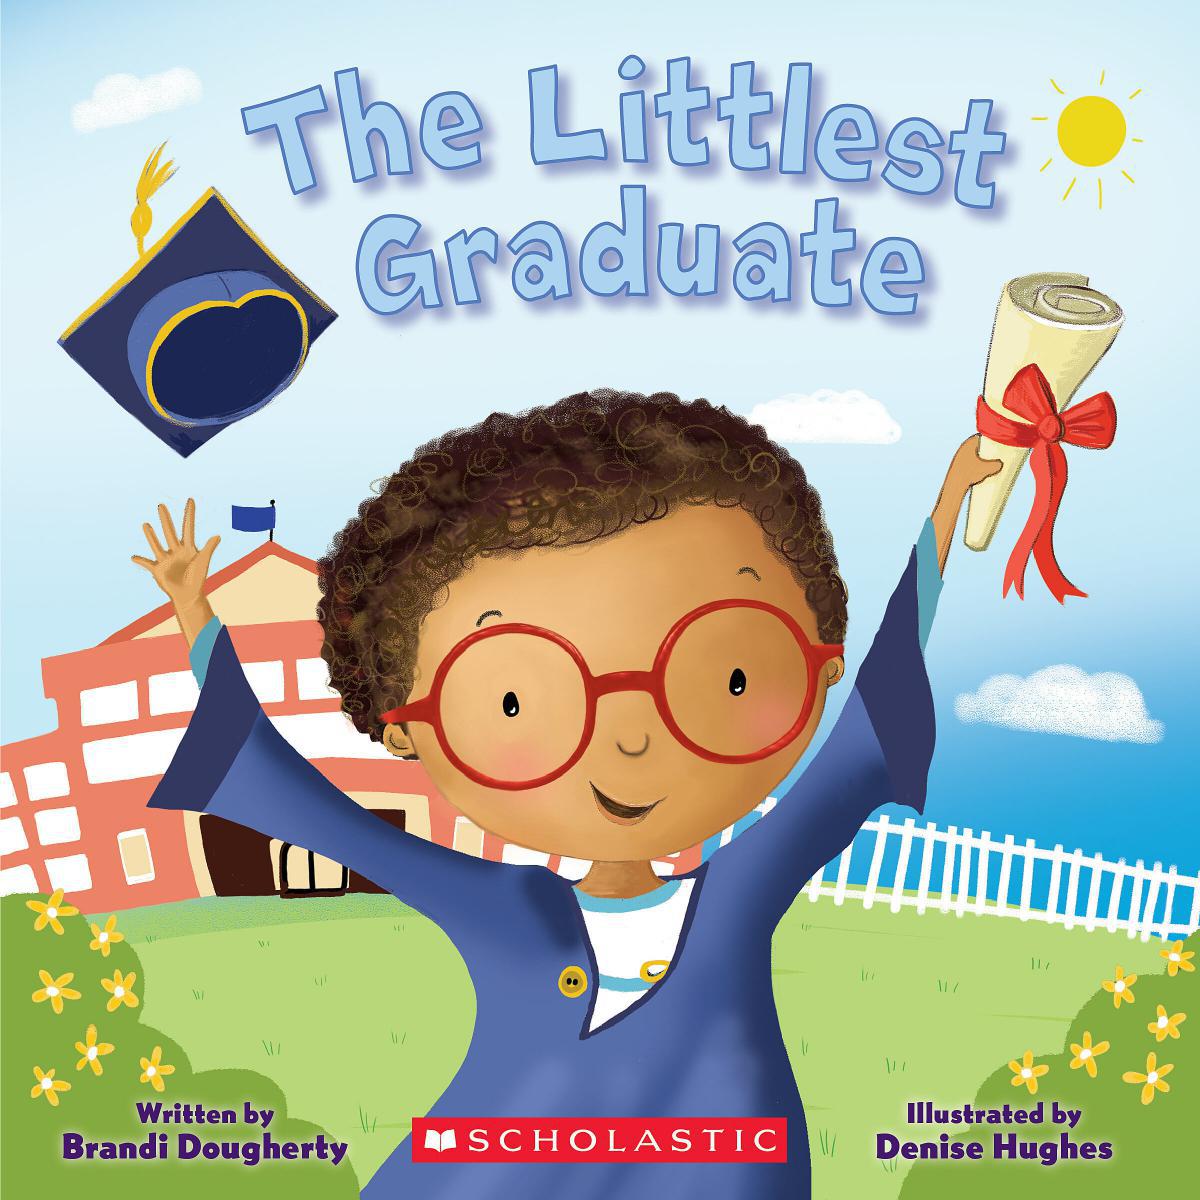  The Littlest Graduate 